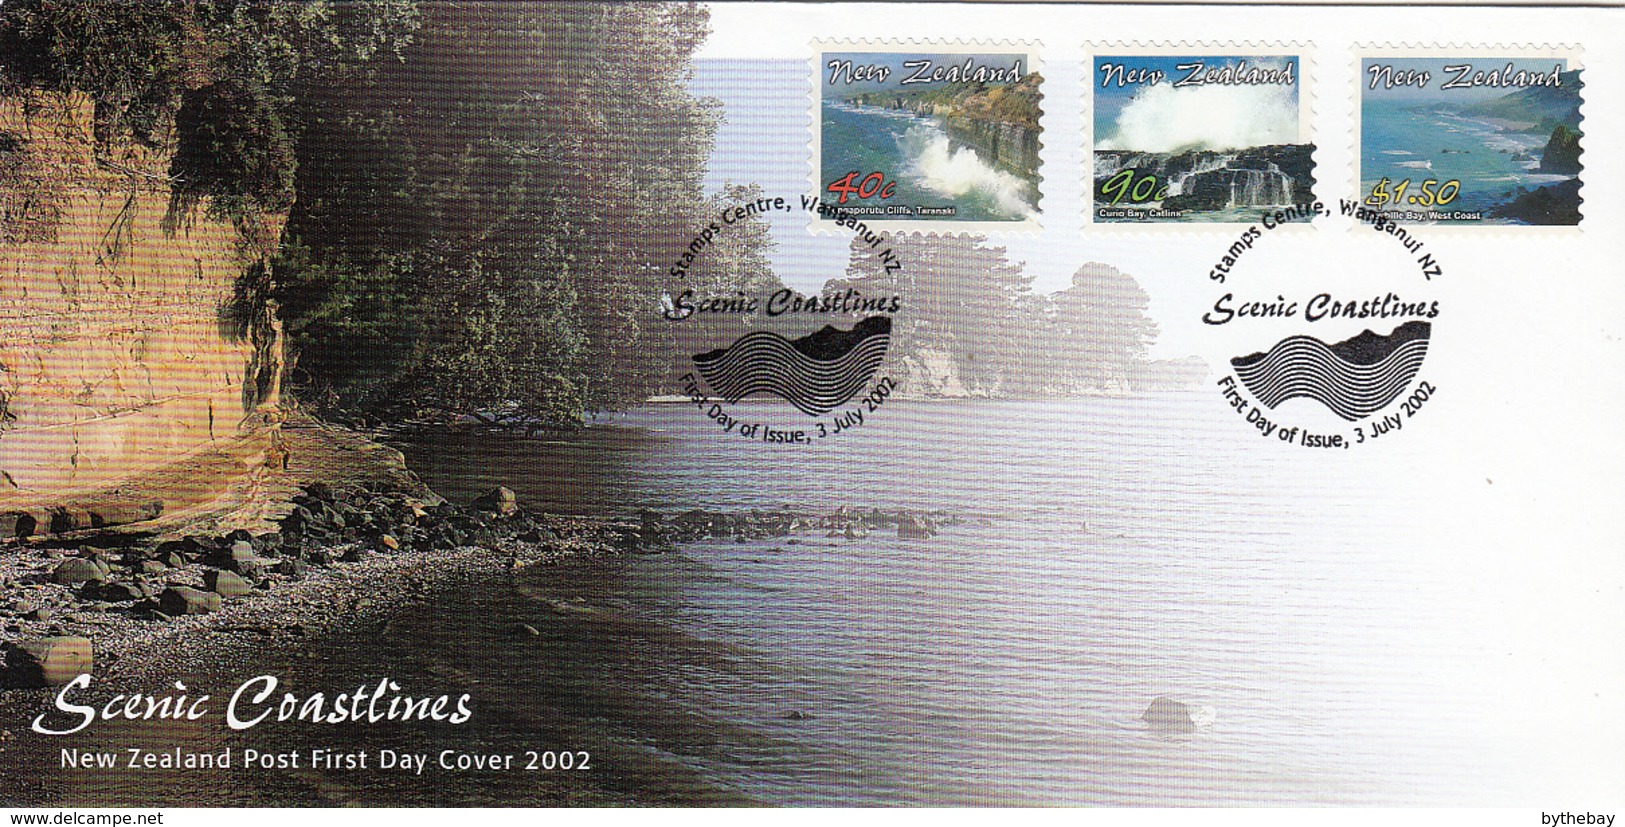 New Zealand 2002 FDC Scott #1805-#1807 Tongaporutu Cliffs, Curio Bay, Meybille Bay Scenic Coastlines - FDC